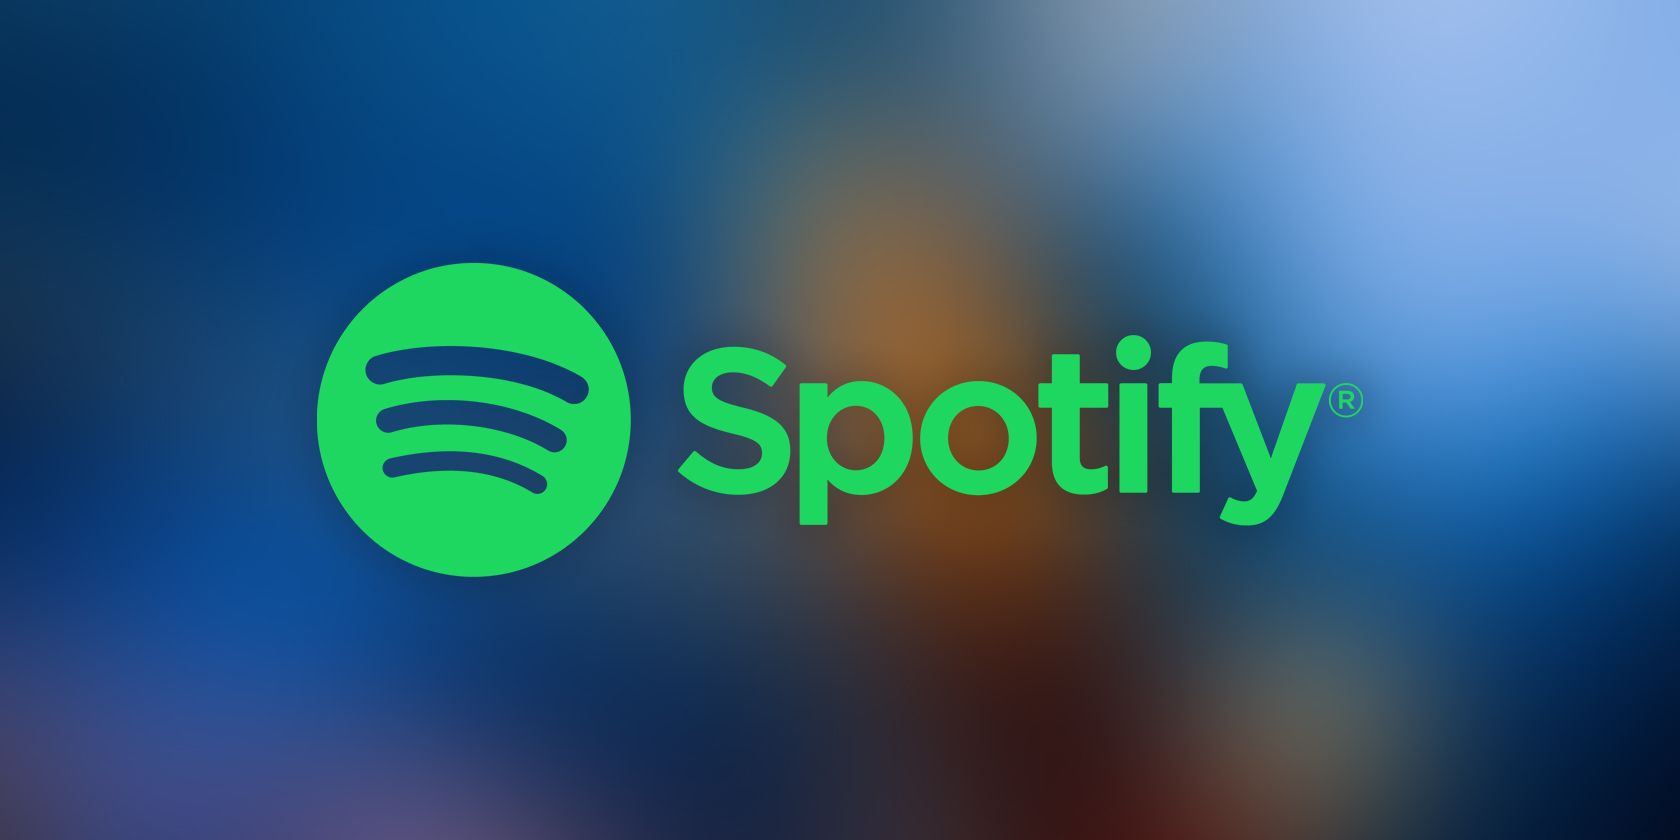 Spotify logo on a blurry background